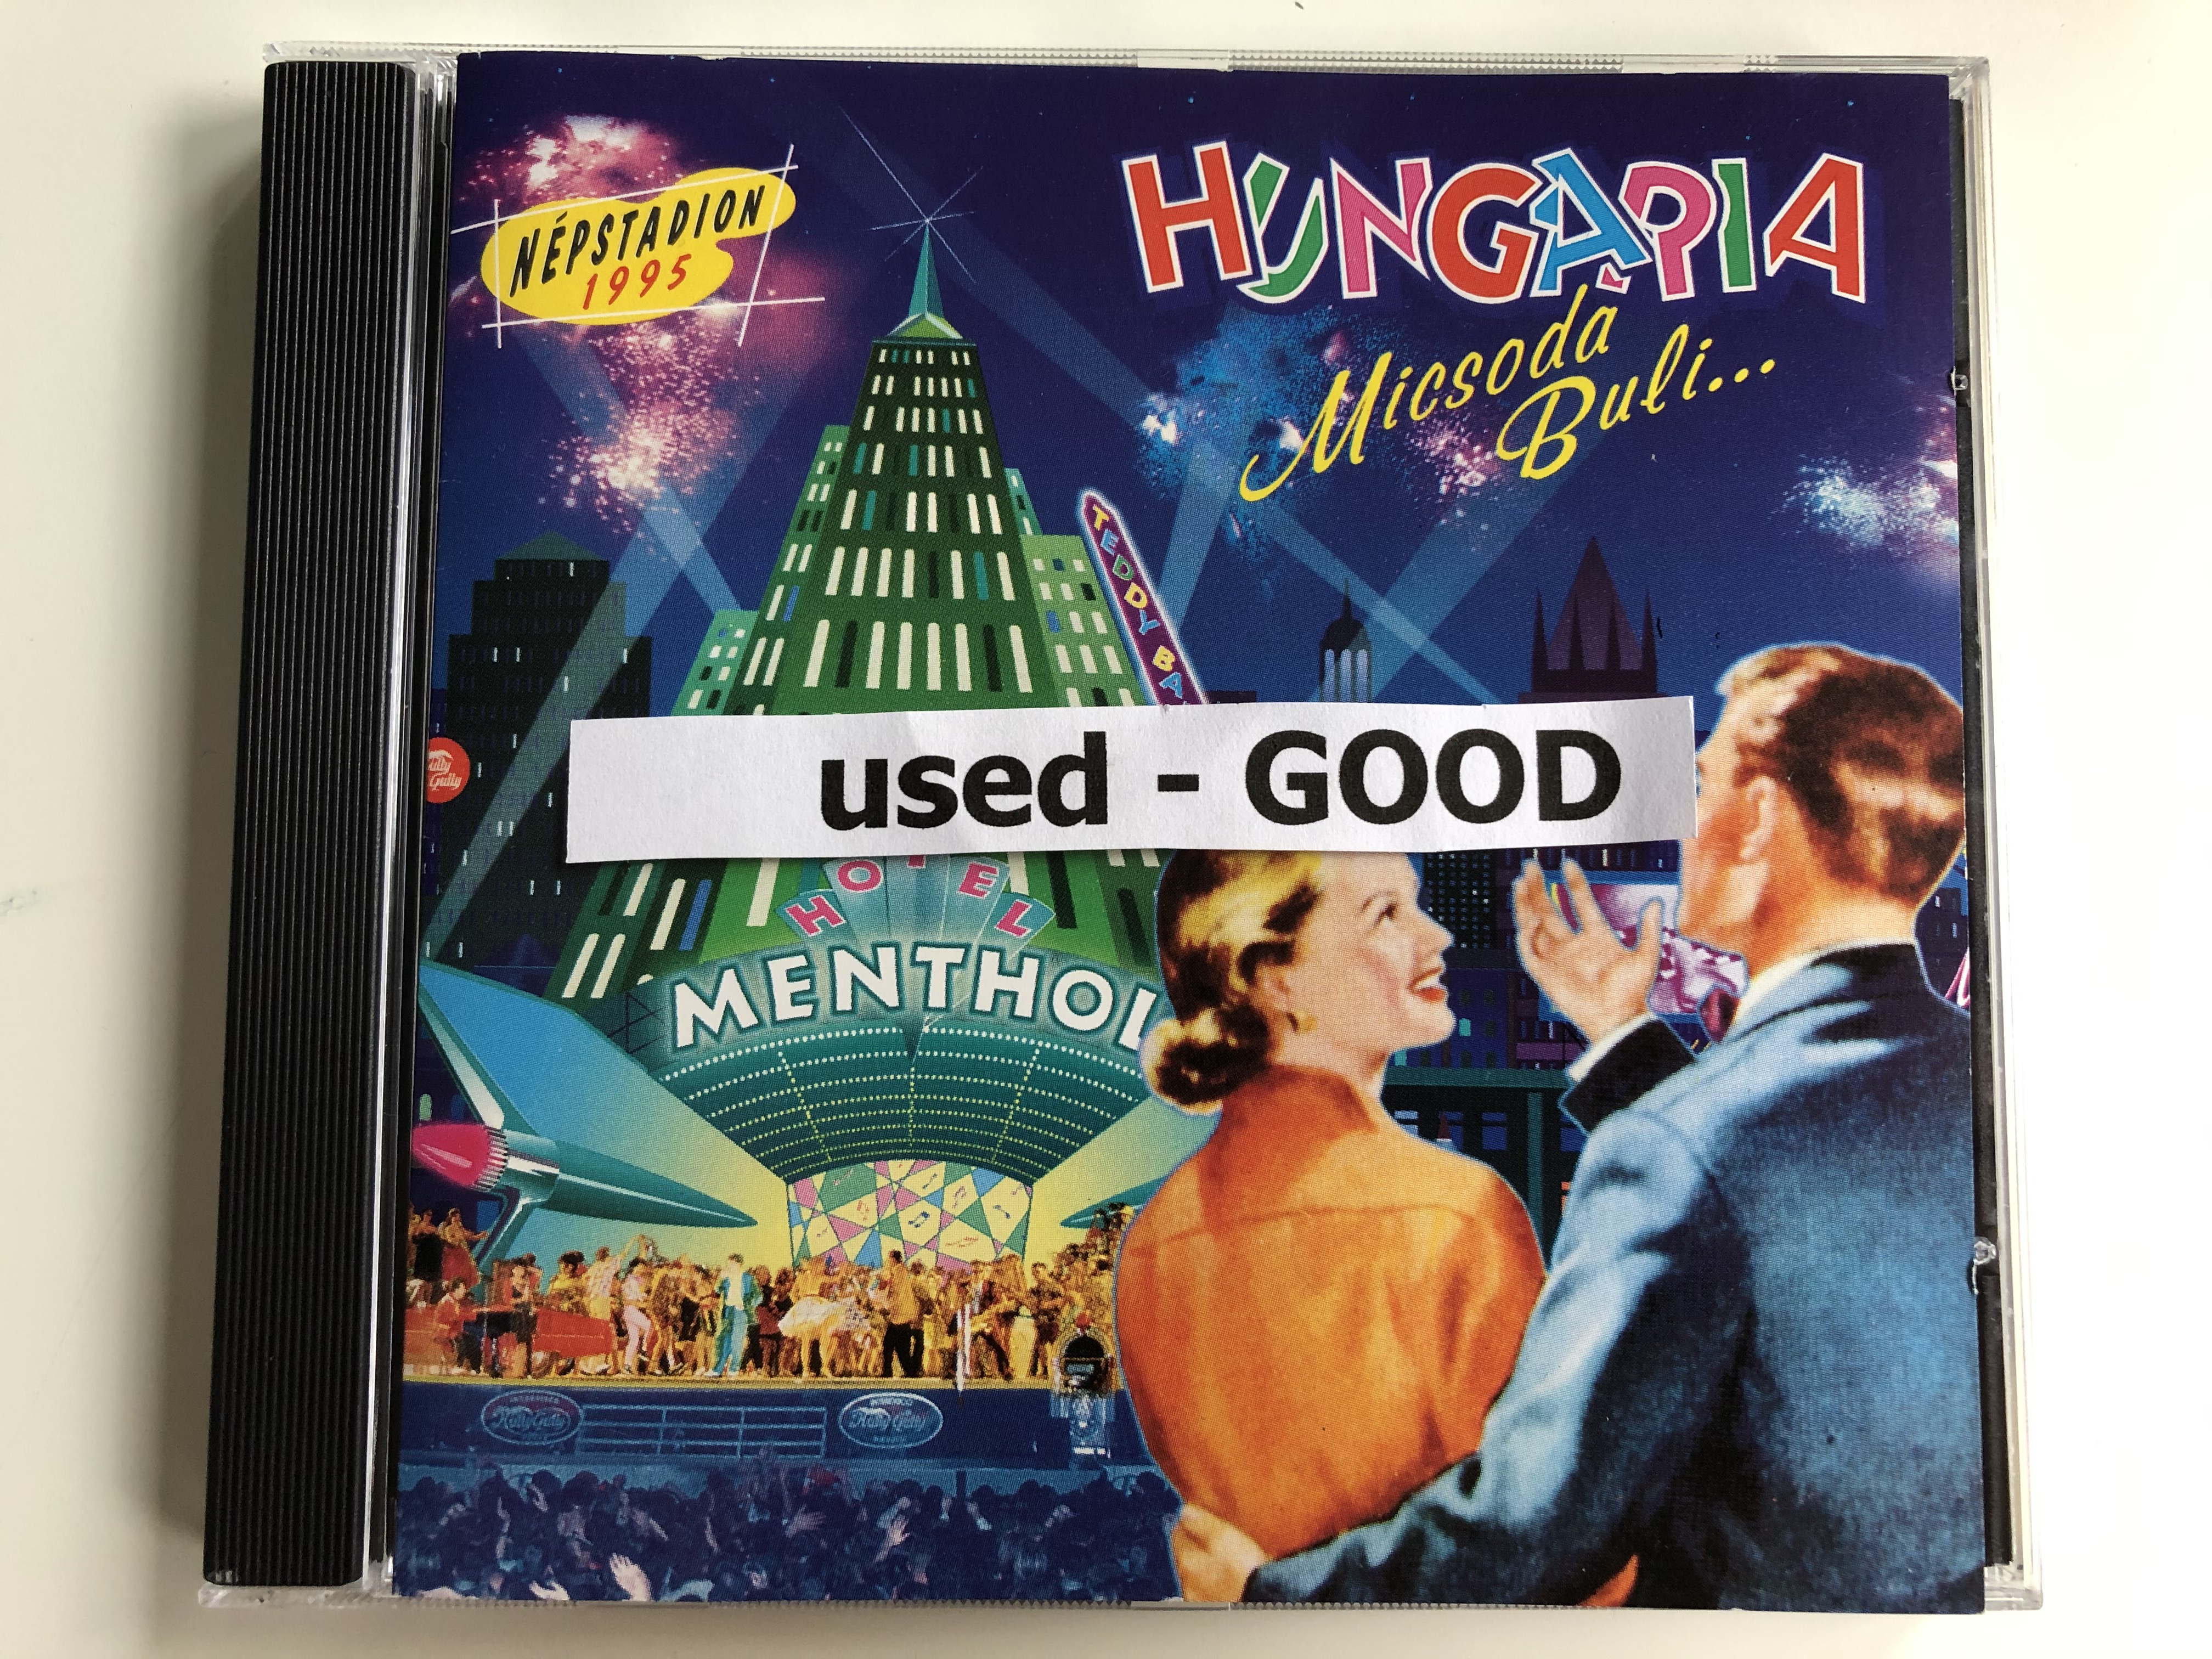 hungaria-micsoda-buli...-n-pstadion-1995-h.d.t.-records-audio-cd-qui-906078-2-.jpg